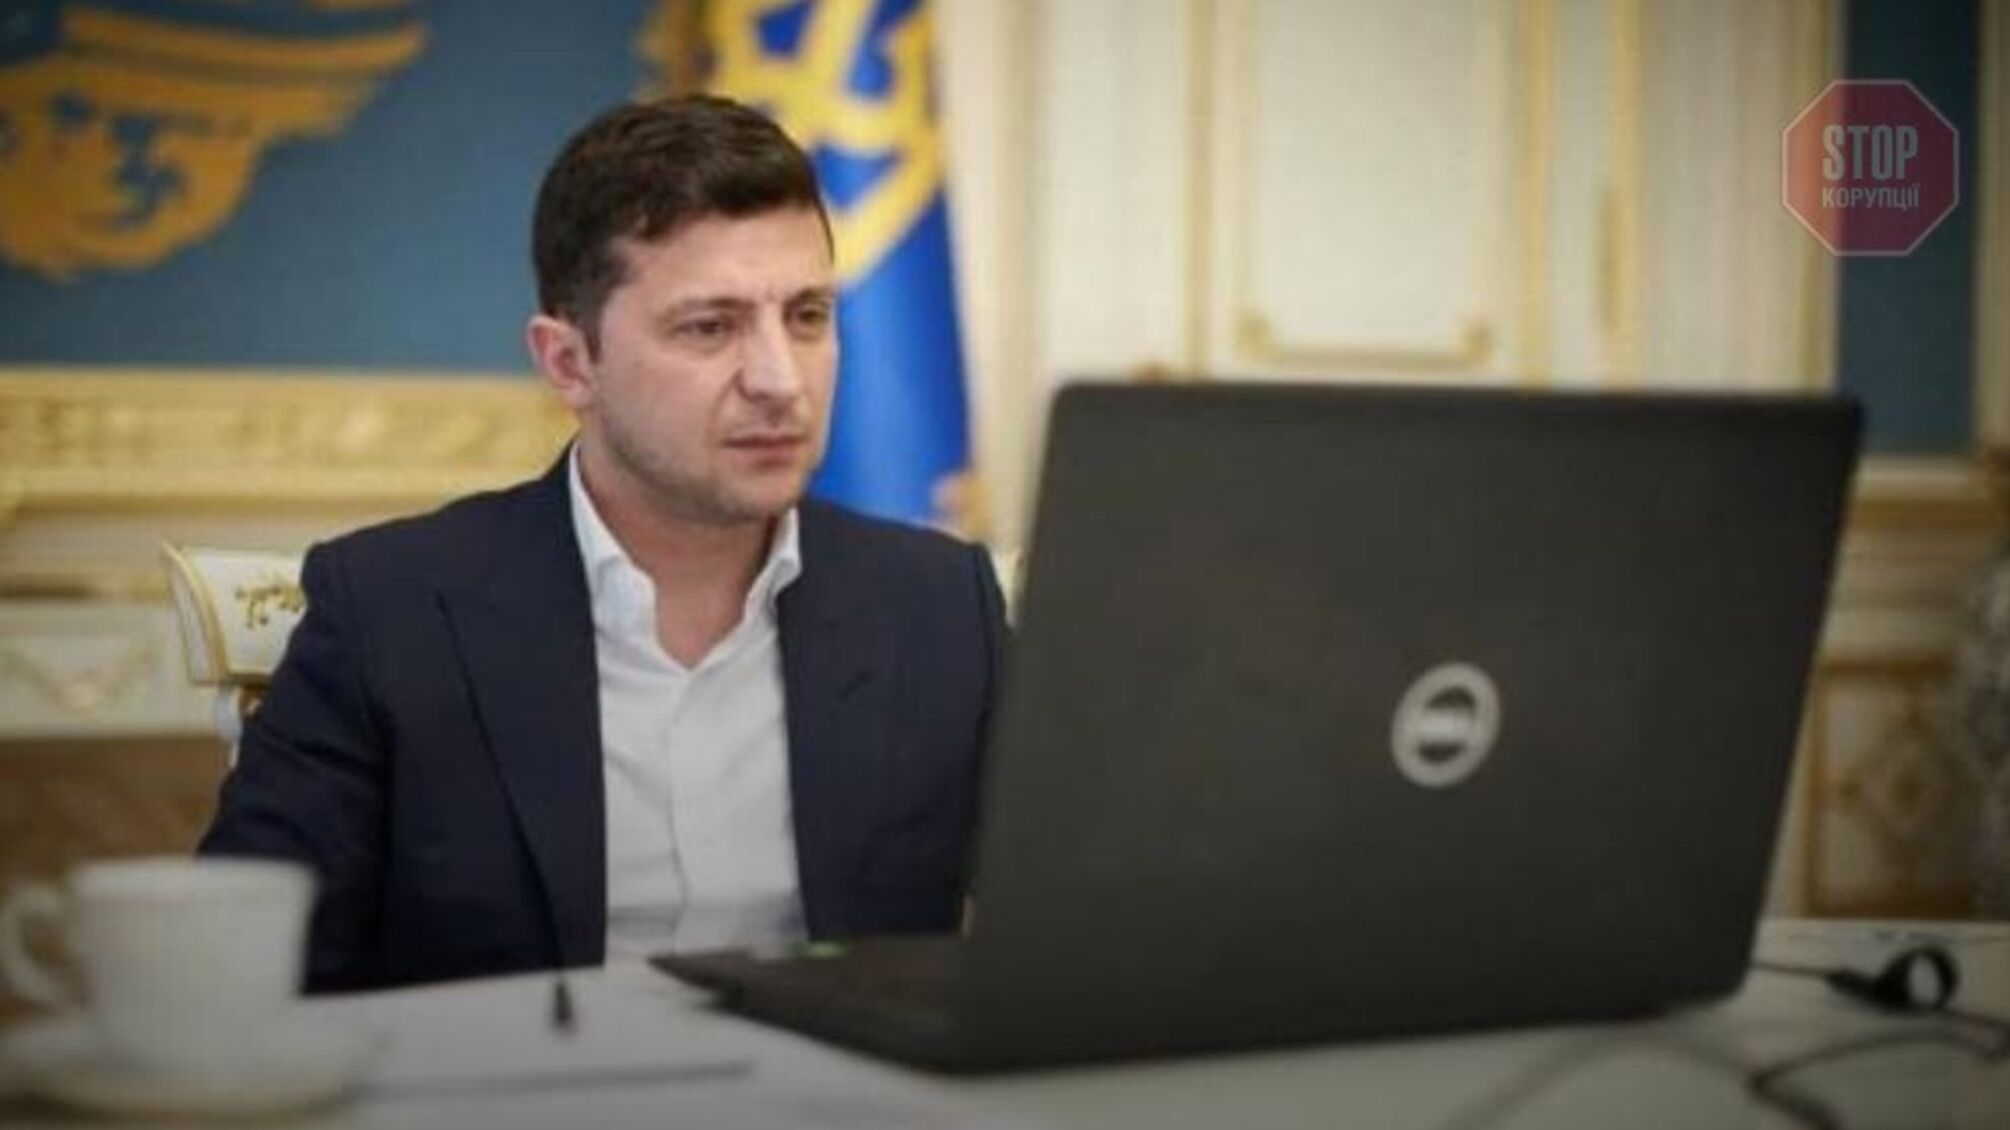 На посаду прессекретаря Зеленського склали long-лист кандидатів